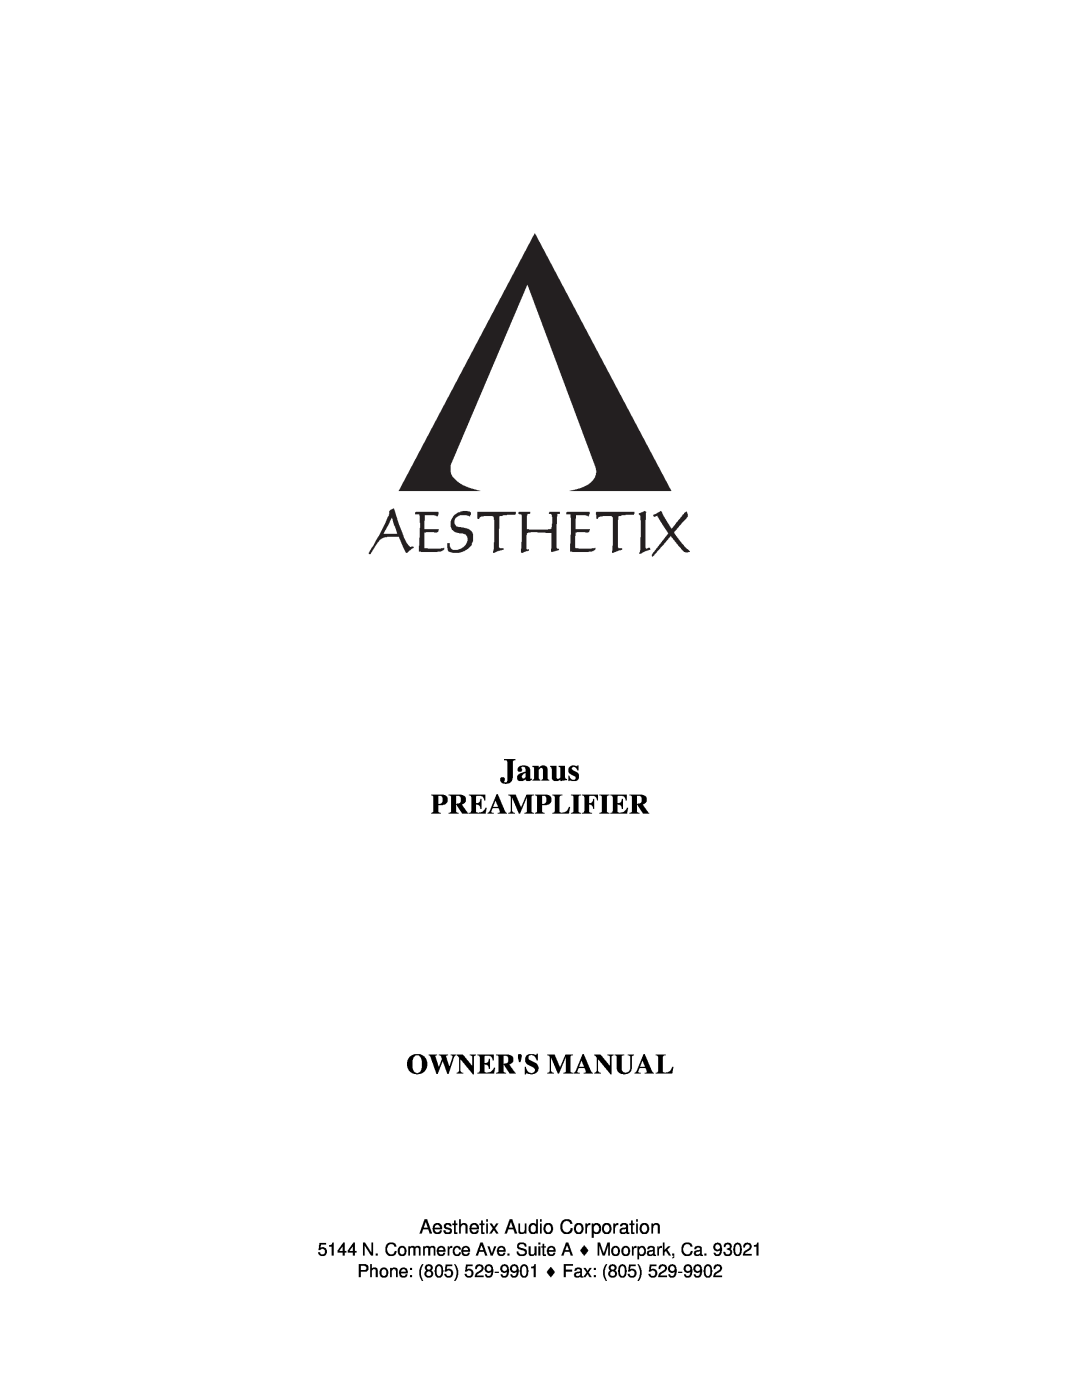 Aesthetix Audio Janus manual Preamplifier Owners Manual, Aesthetix Audio Corporation, Phone 805 529-9901 Fax 